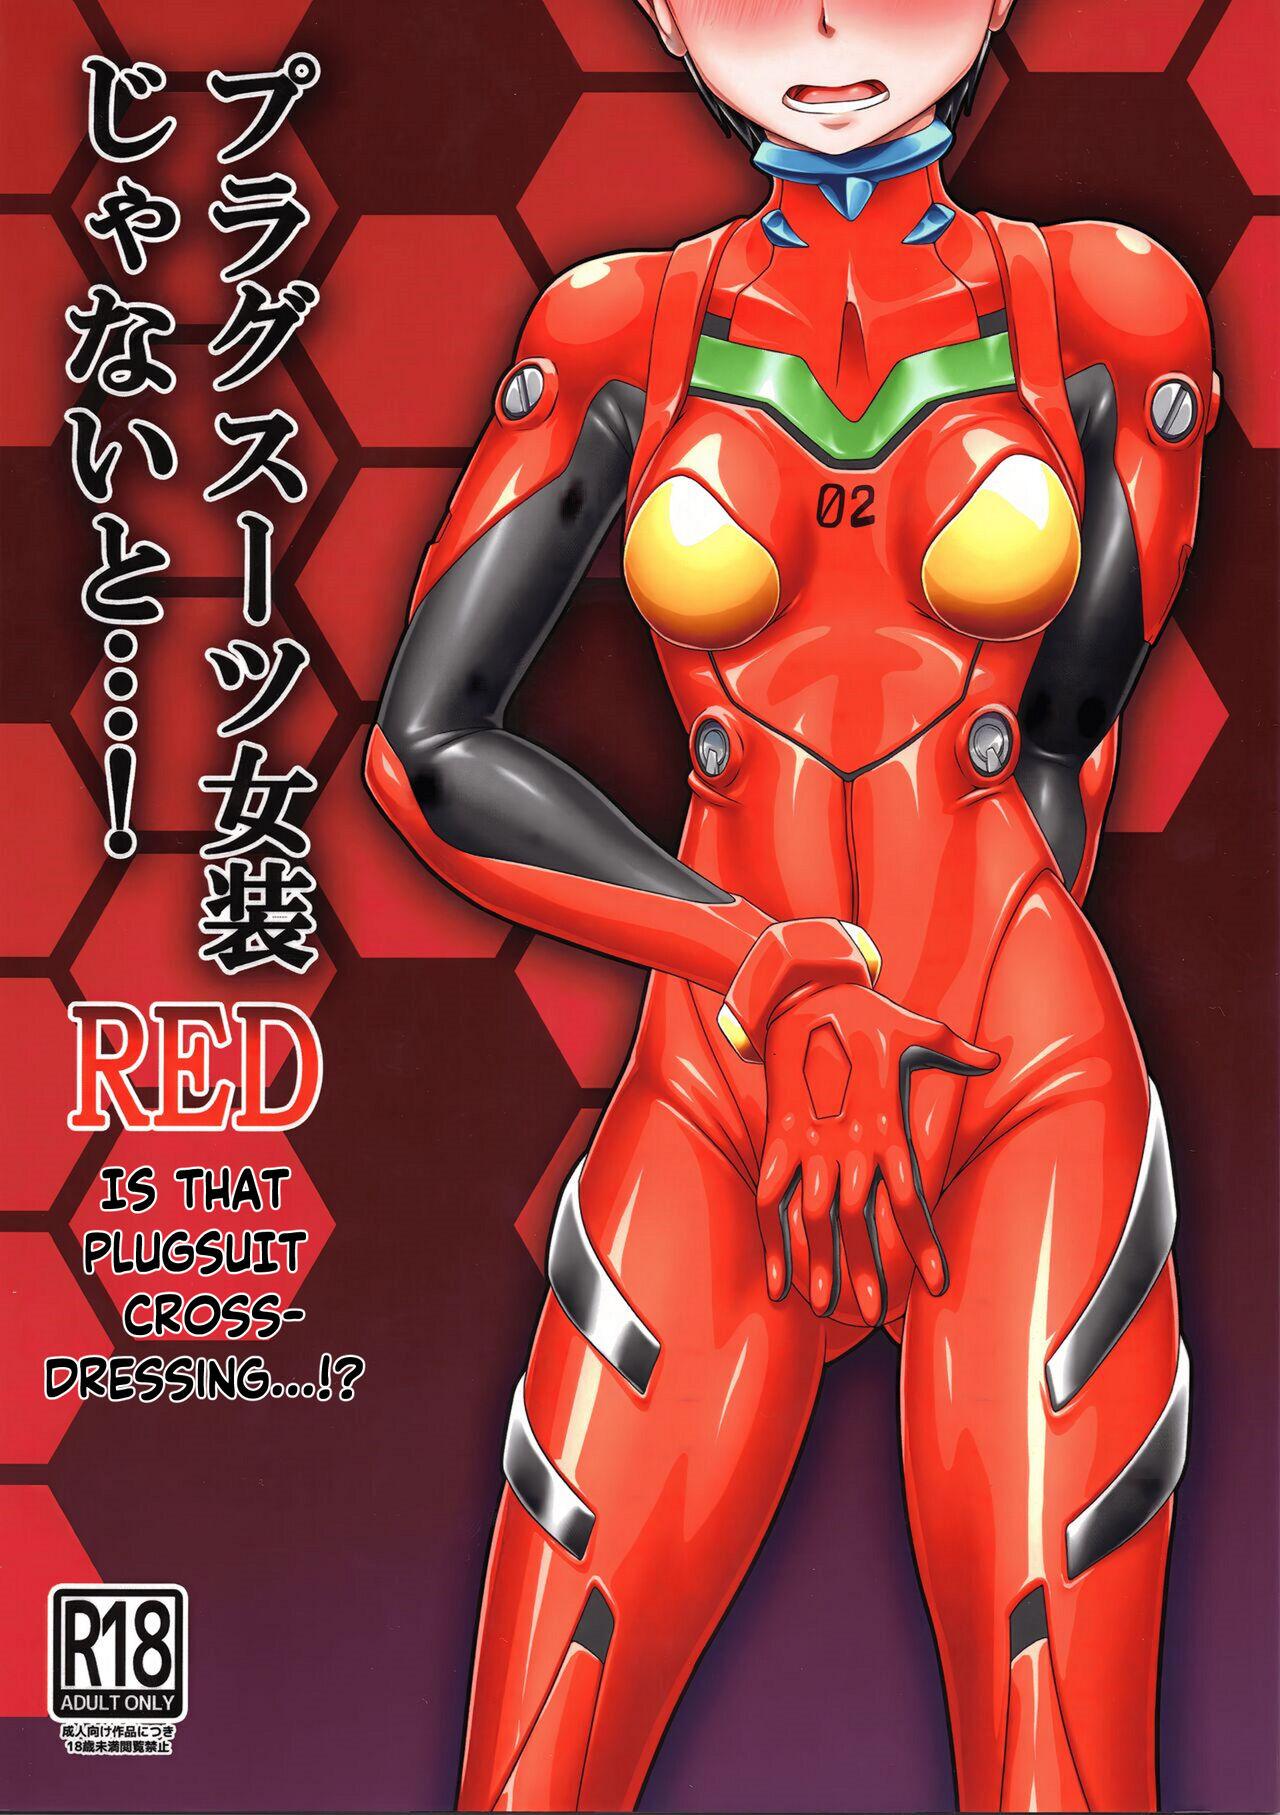 Super Plugsuit Josou ja Nai to...! RED | Is that plugsuit cross-dressing...!? - Neon genesis evangelion Orgasmus - Picture 1